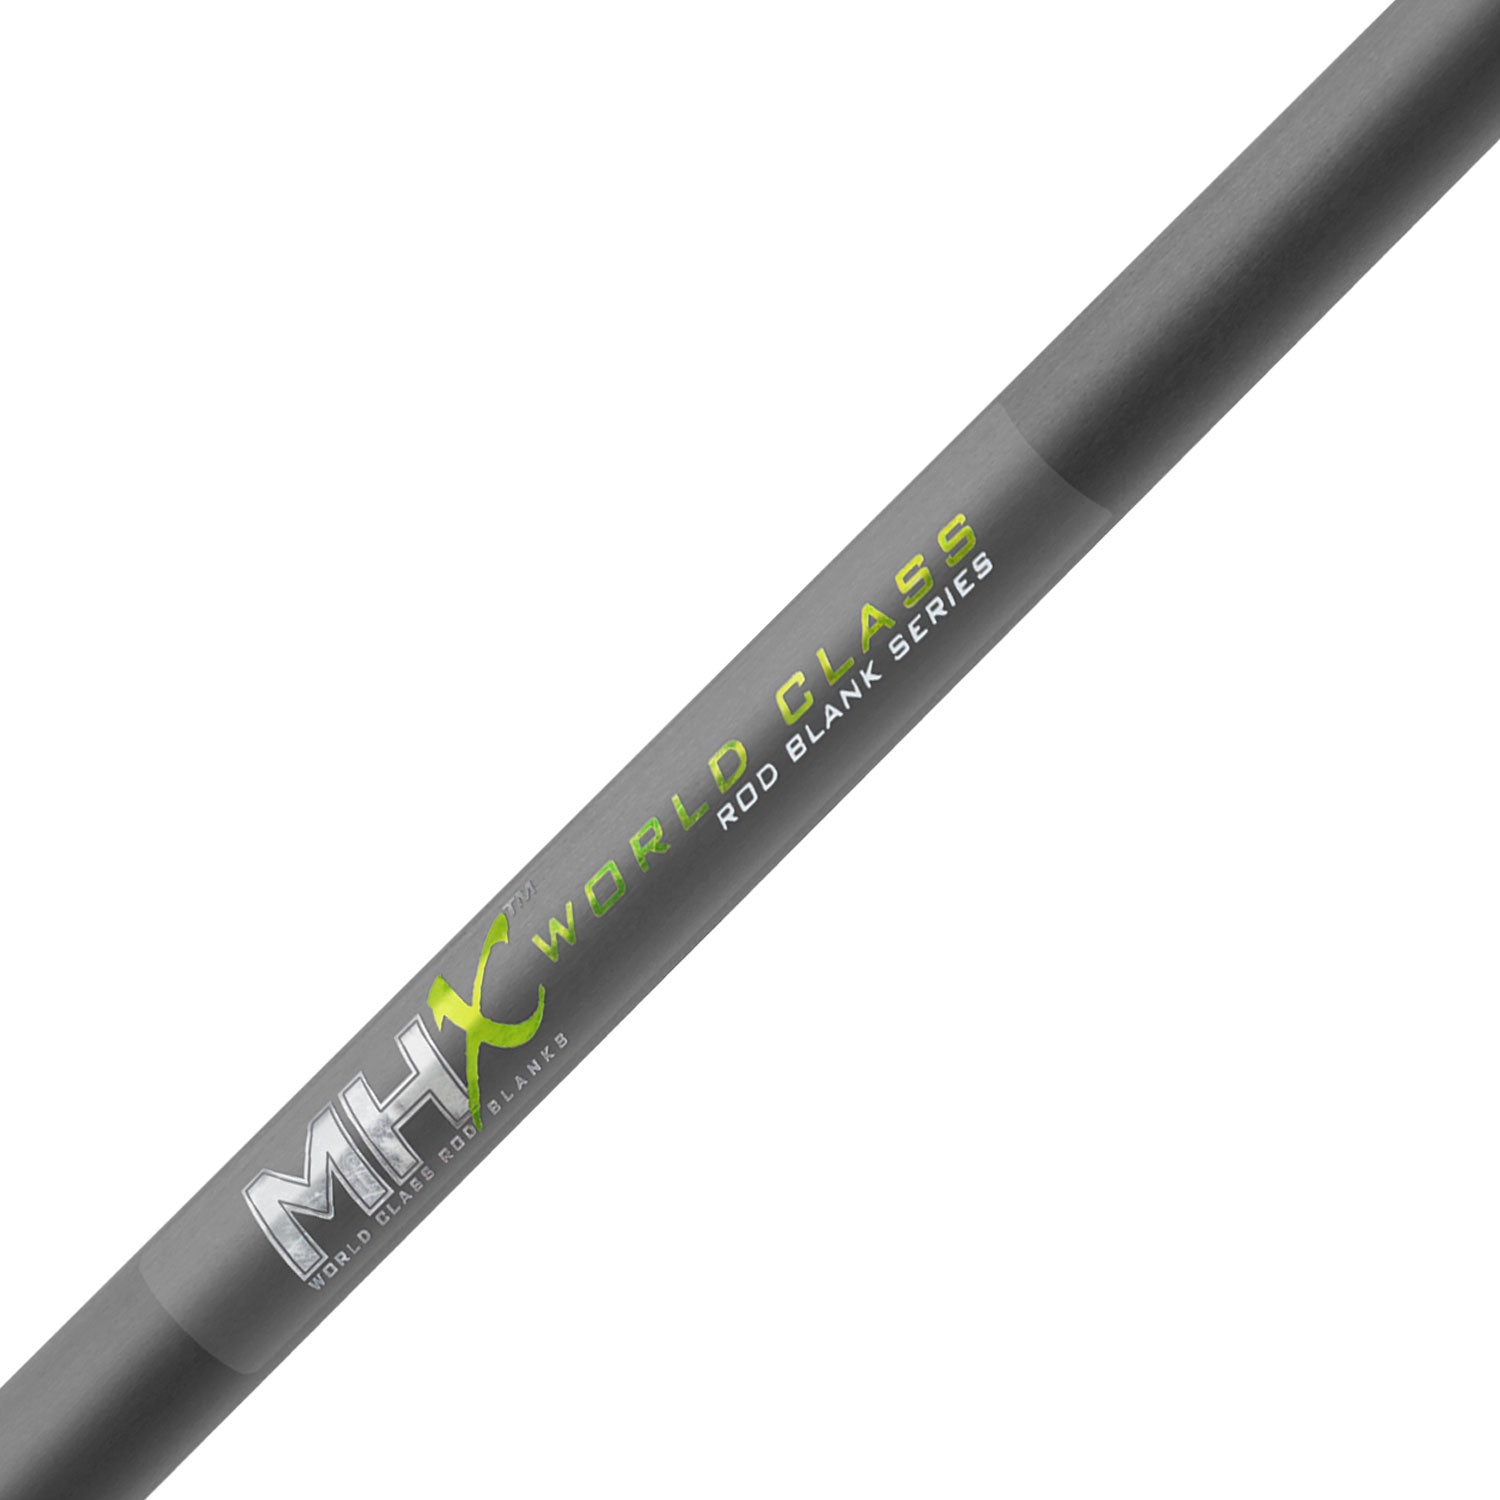 MHX 7'6" Medium Crankbait Rod Blank - CB903-Blend